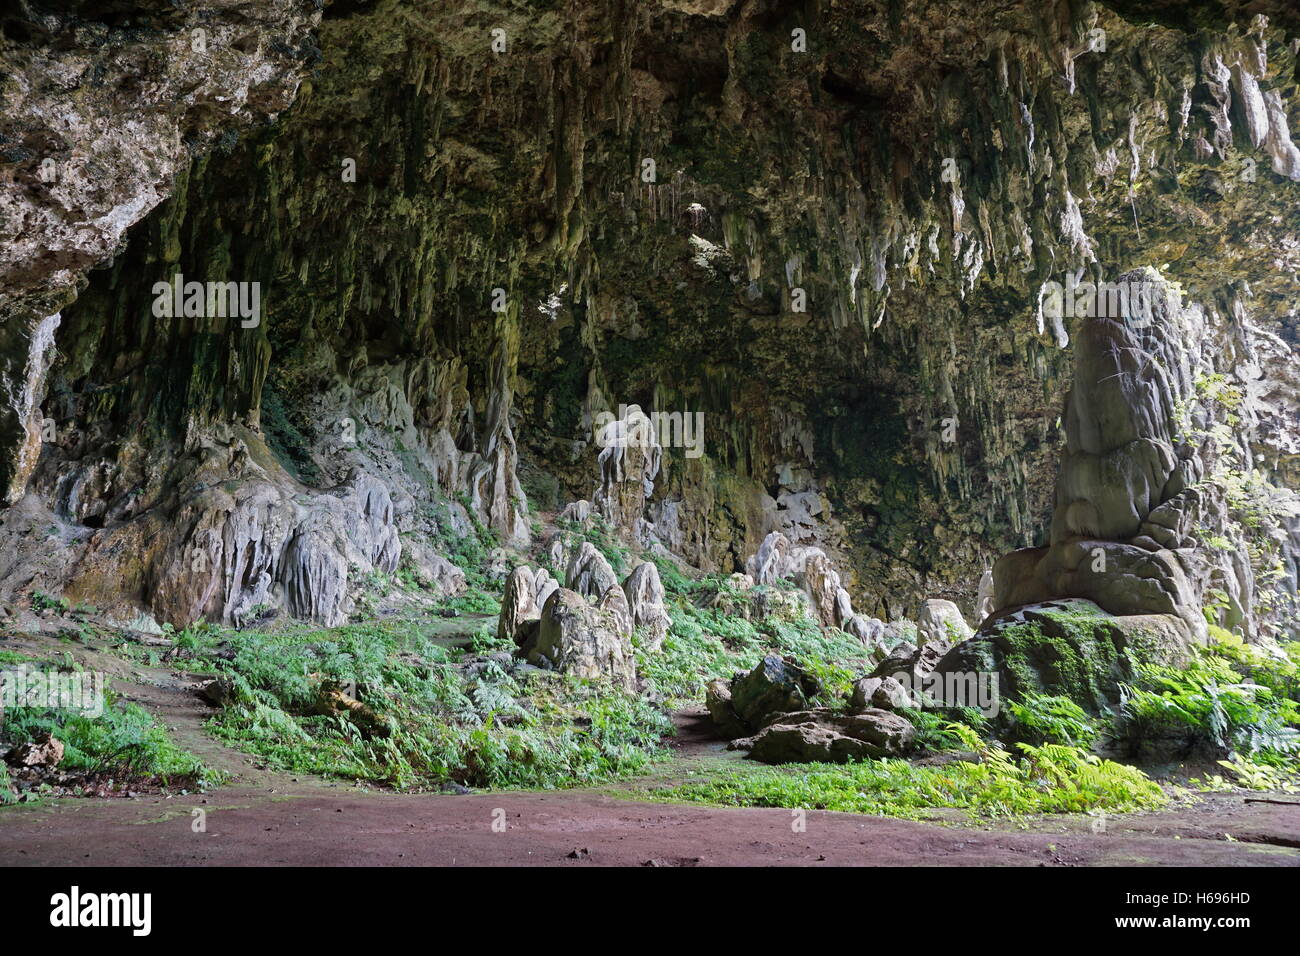 Large limestone cavern with stalactites and stalagmites, Ana aeo, Rurutu island, south Pacific, Austral, French Polynesia Stock Photo